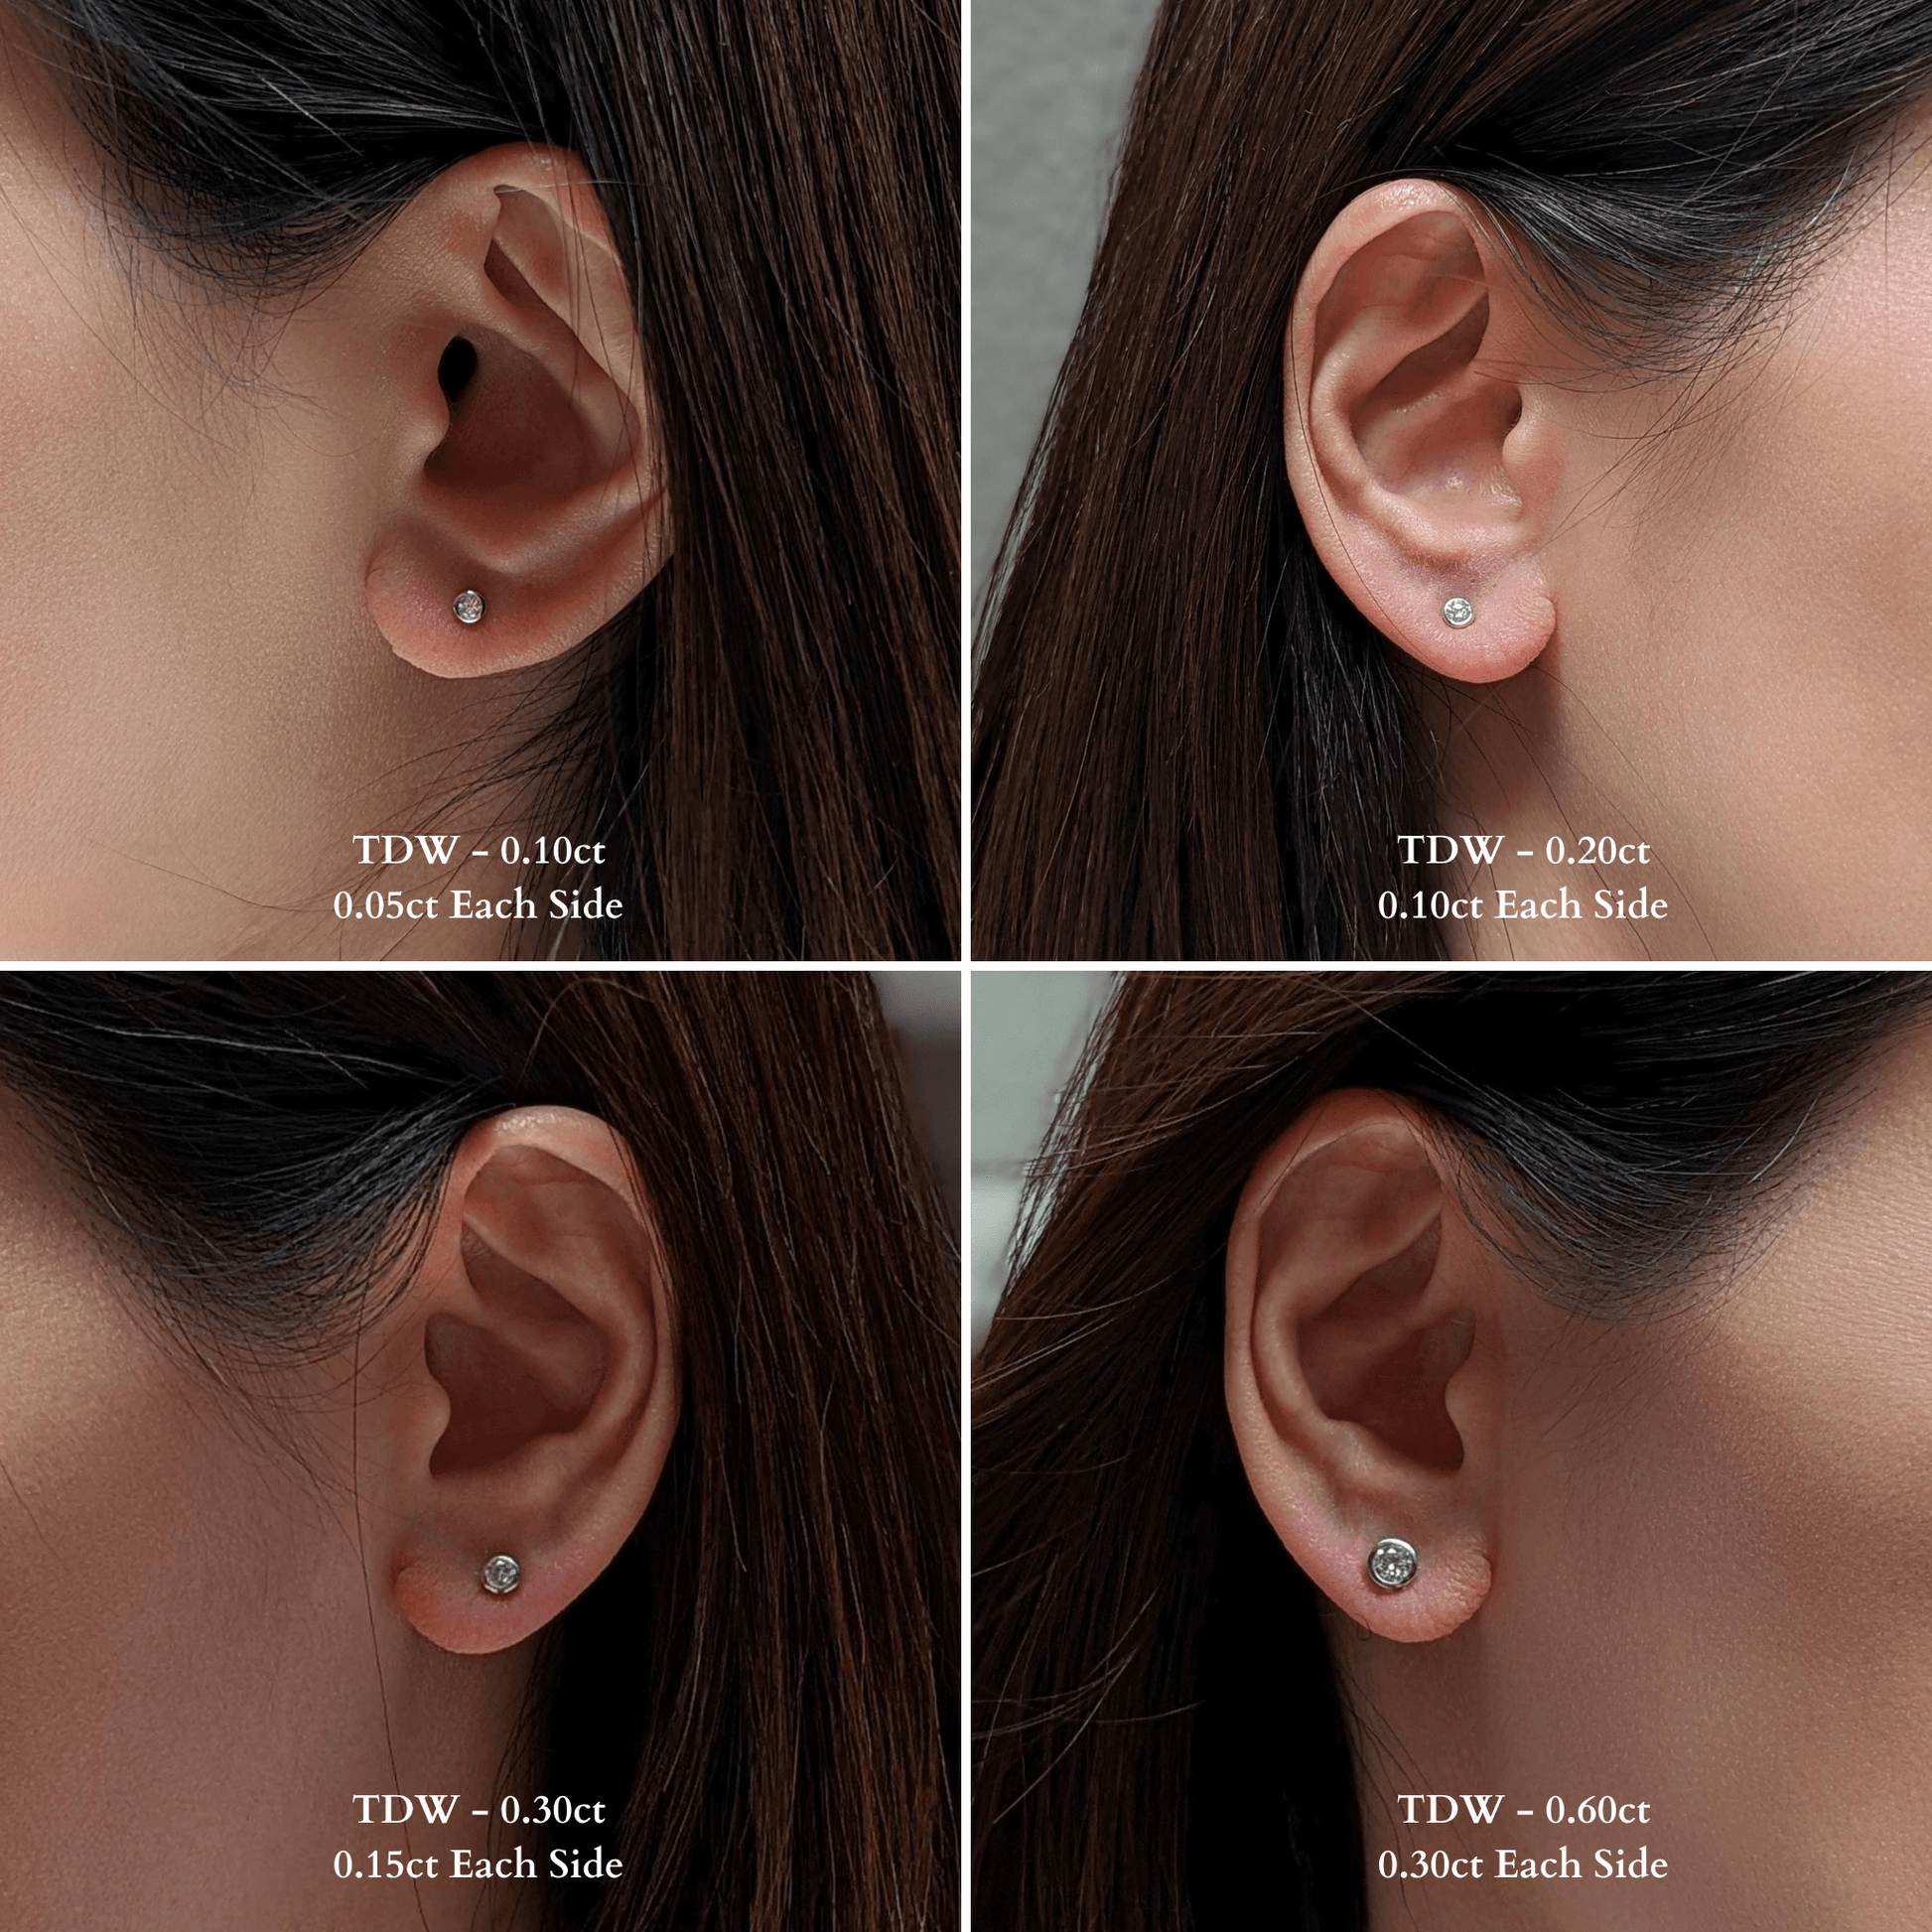 Bezel Diamond Earrings 0.20tcw | 18ct White Gold - Rosendorff Diamond Jewellers